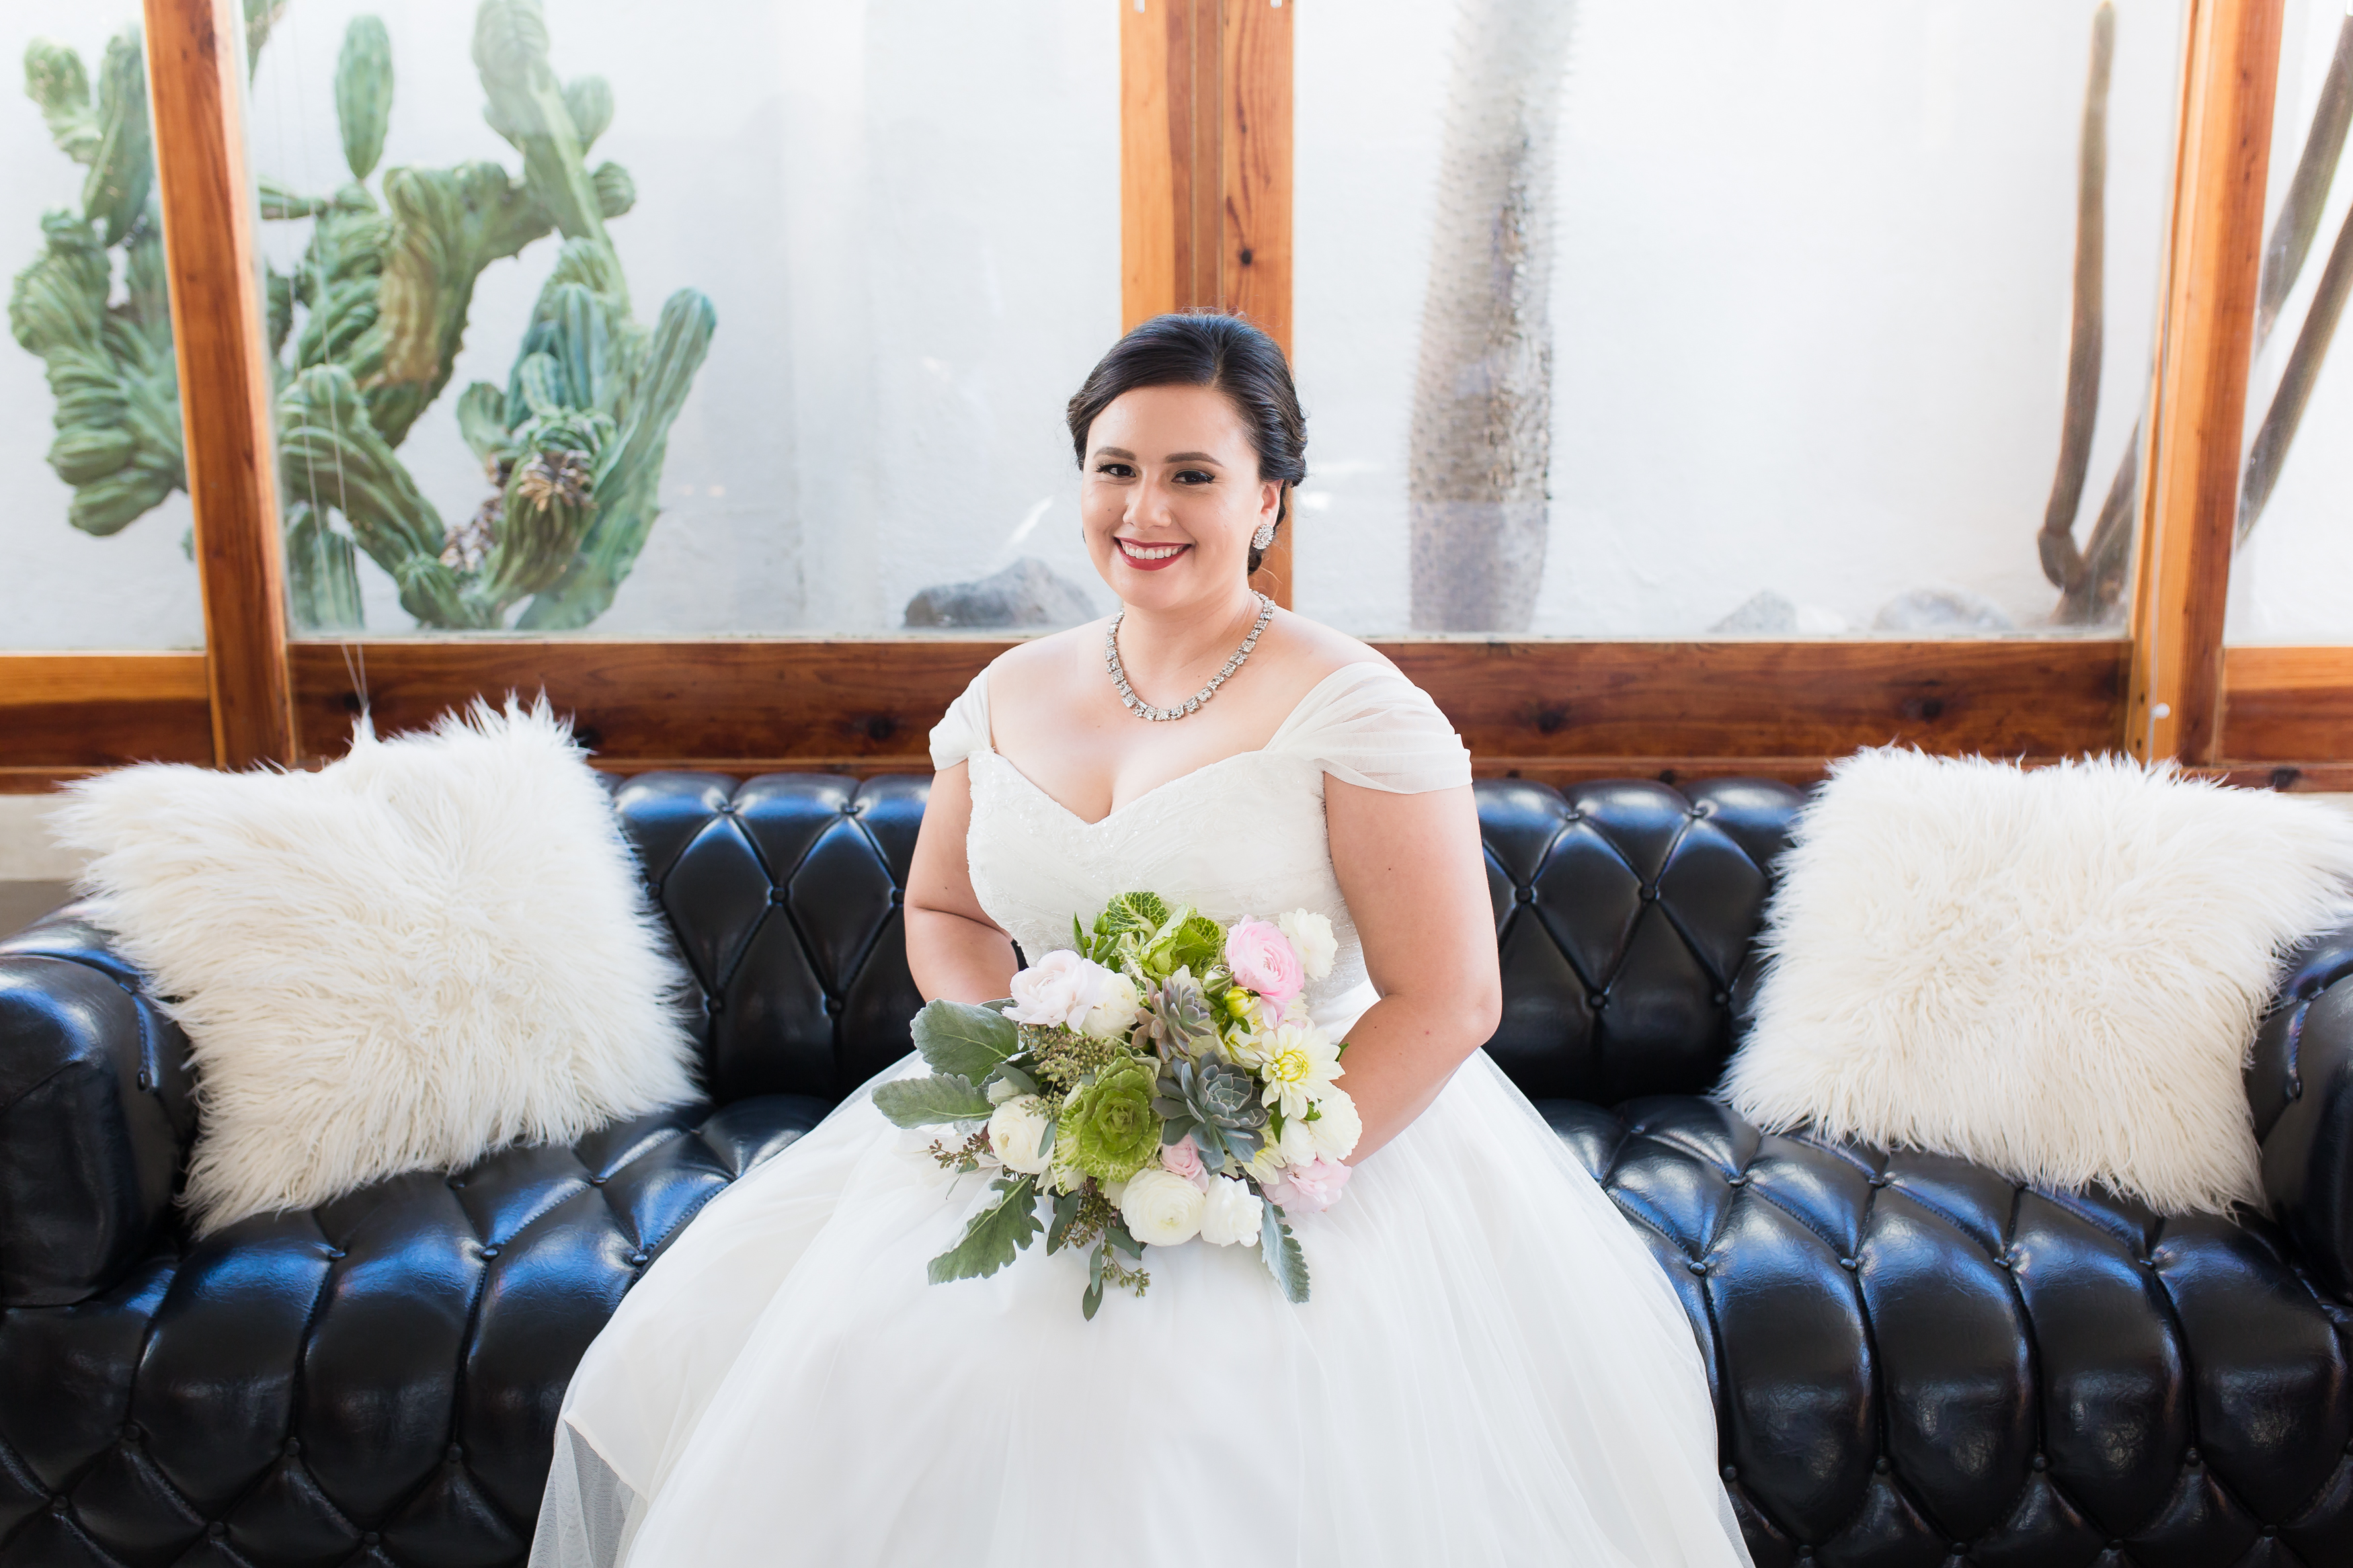 Brunette bride in off the shoulder wedding dress sitting on black leather couch